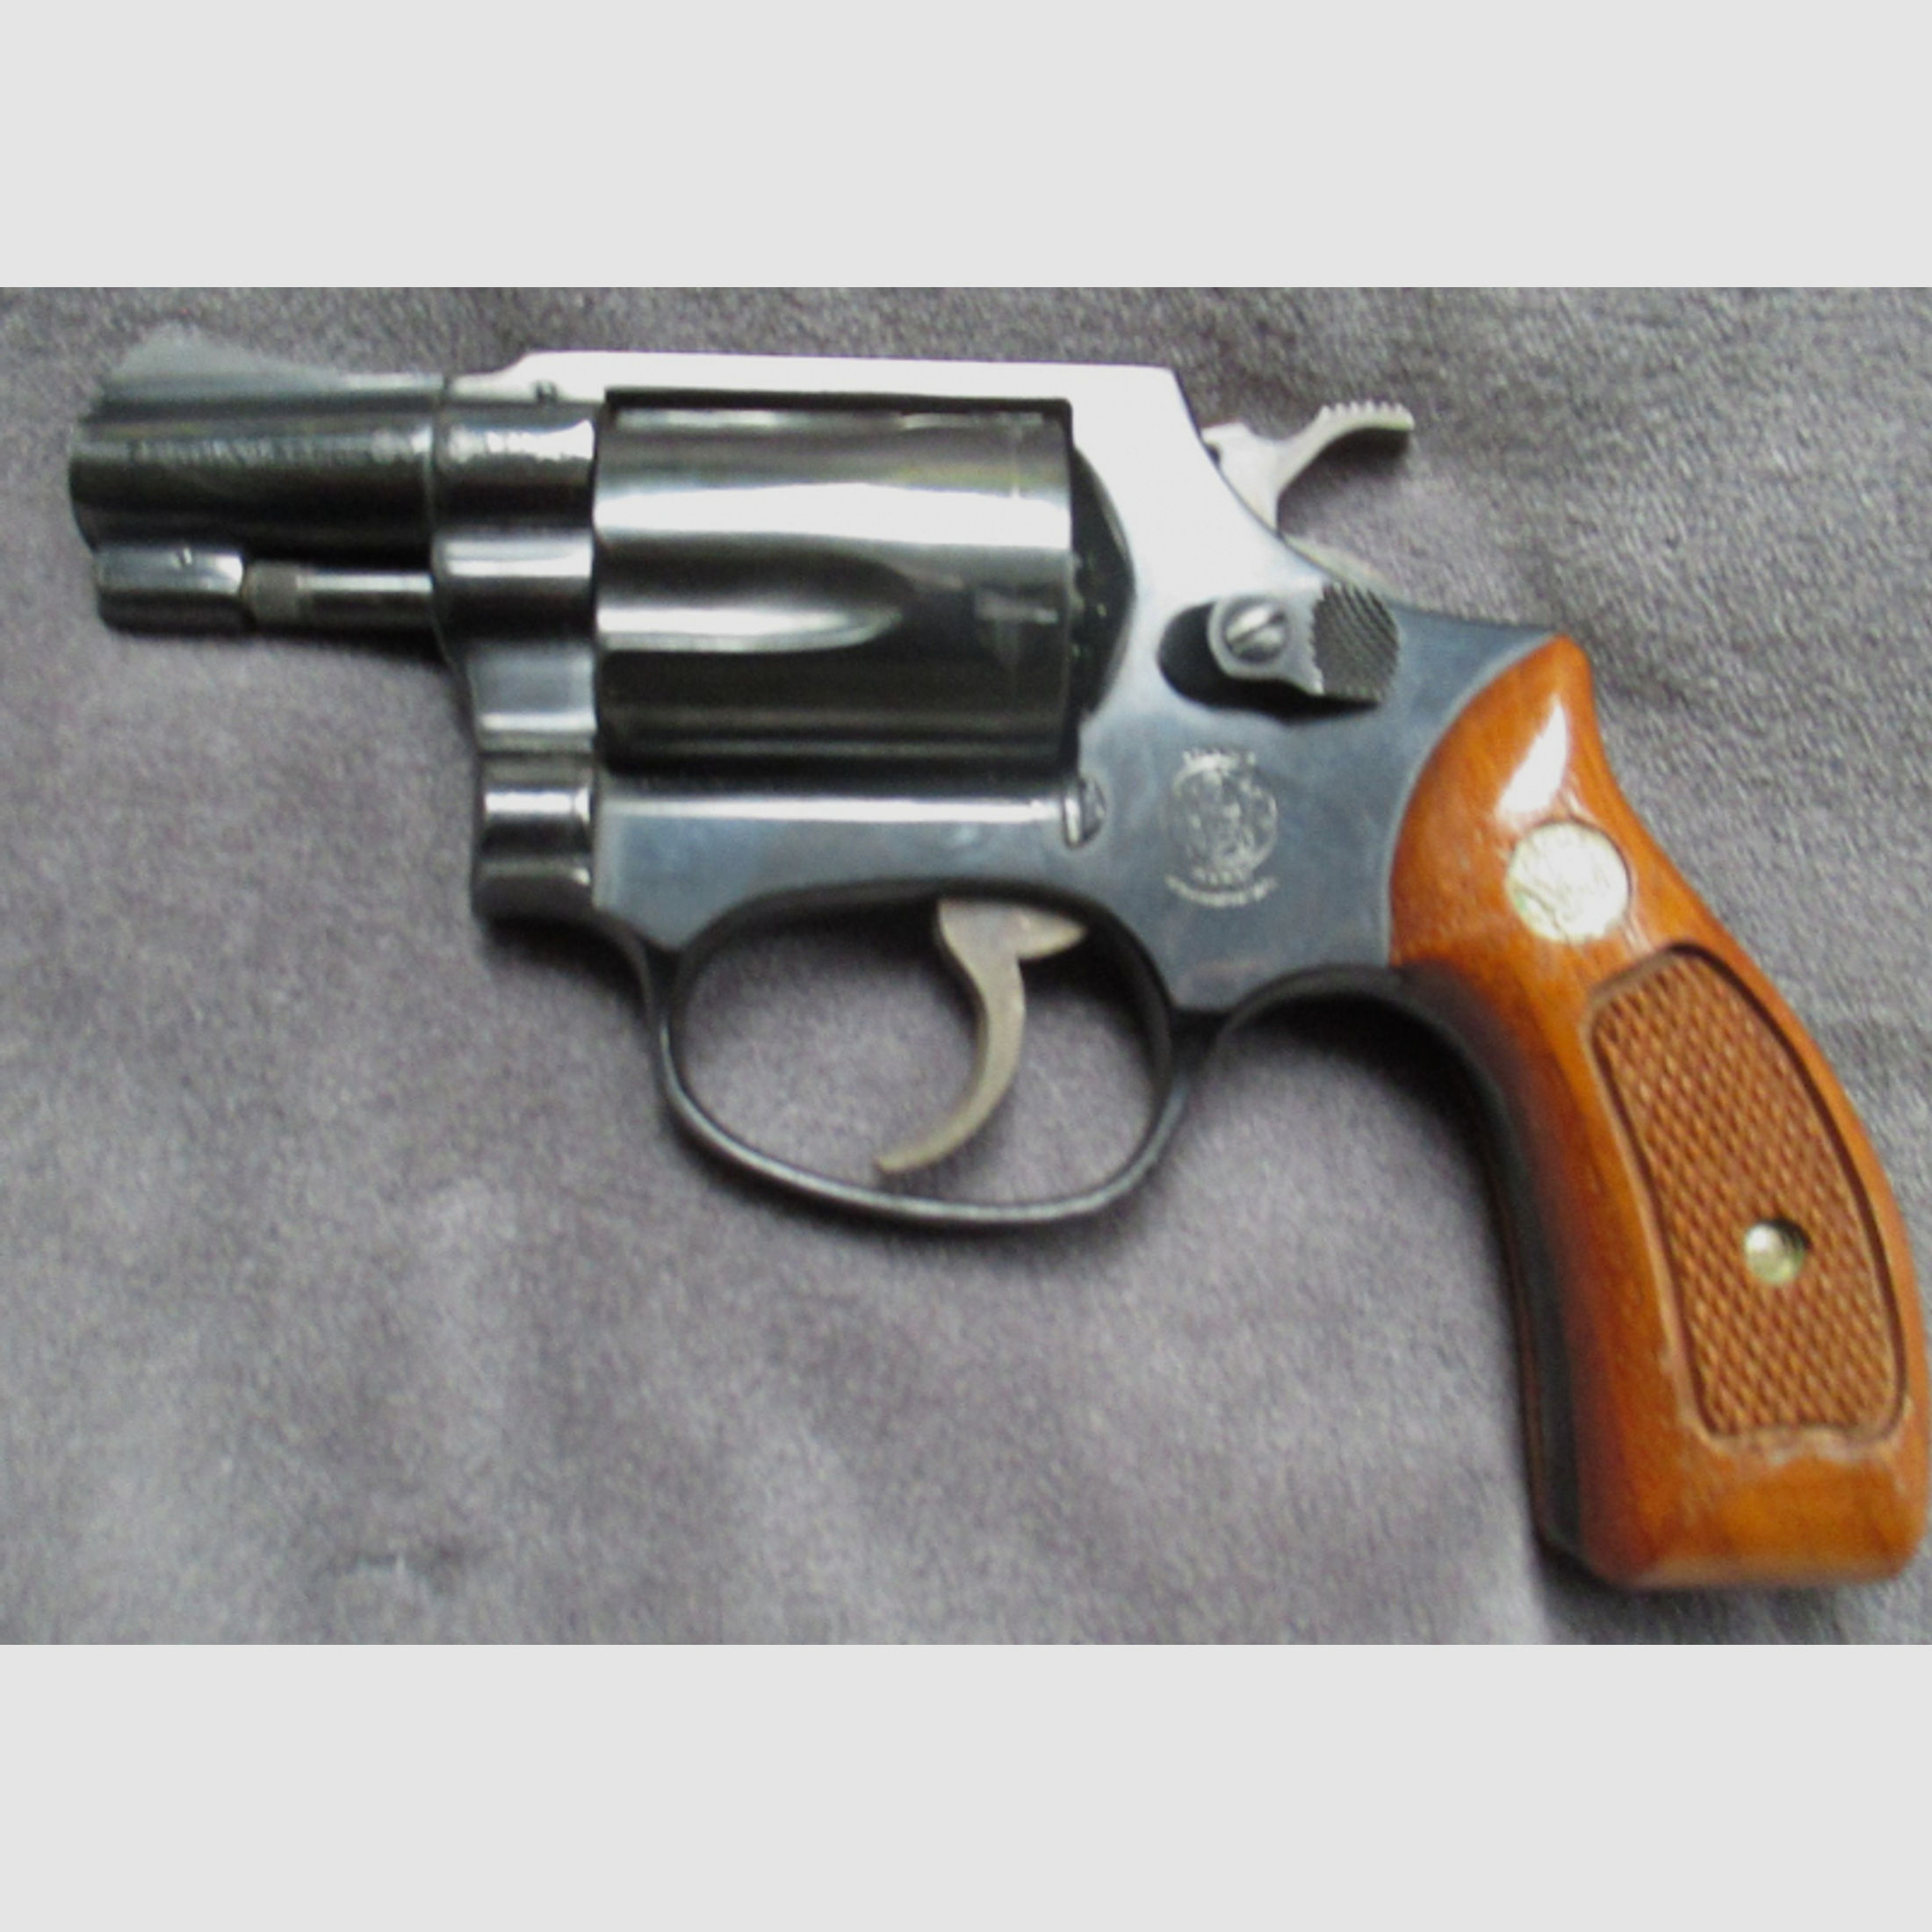 Smith and Wesson S&W Revolver Modell 36 Lauflänge 2 Zoll Kal. 38 Spec